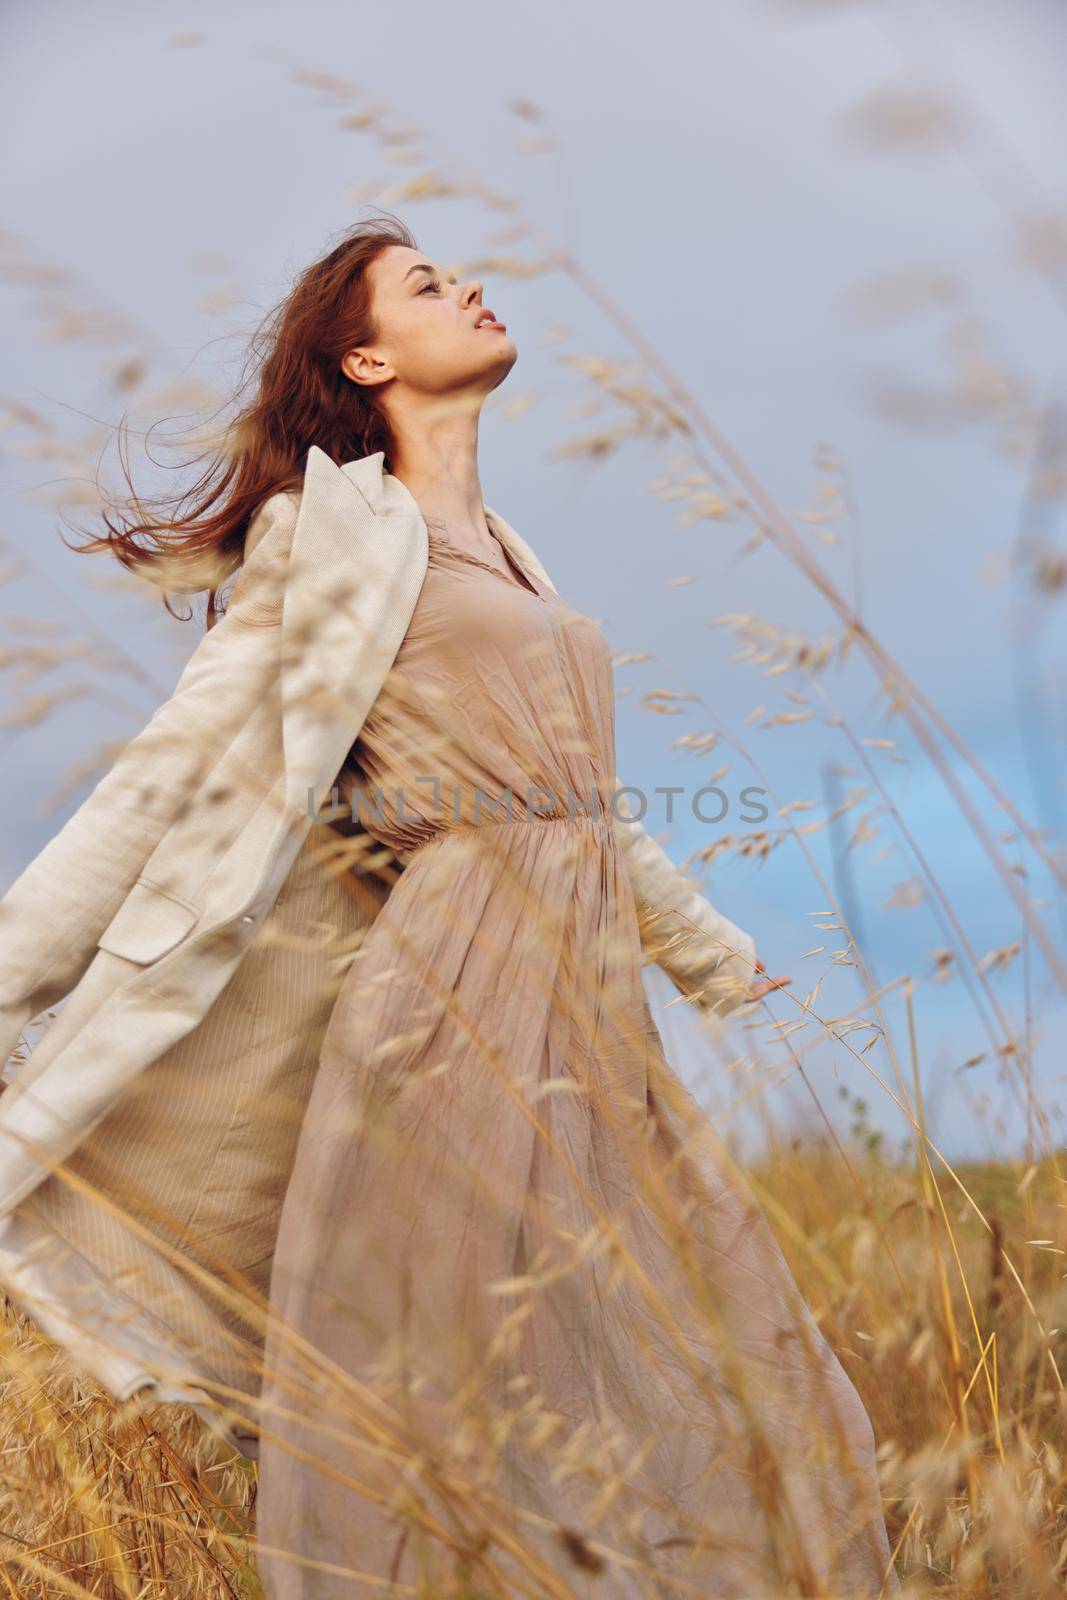 beautiful woman coat outdoors walk autumn season concept. High quality photo